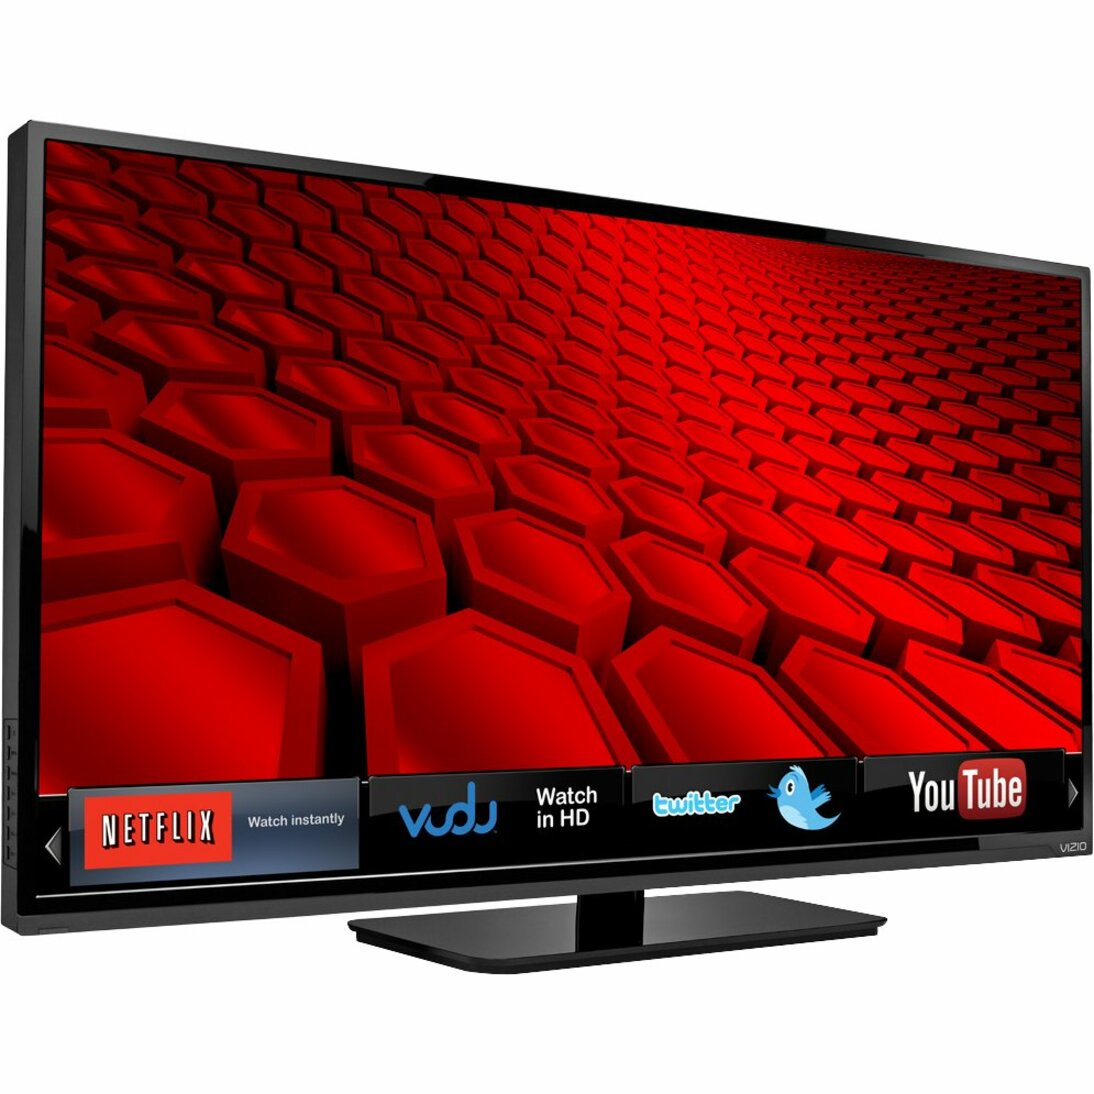 VIZIO 39" Class HDTV (1080p) Smart LED-LCD TV (E390I-A1) - image 1 of 7